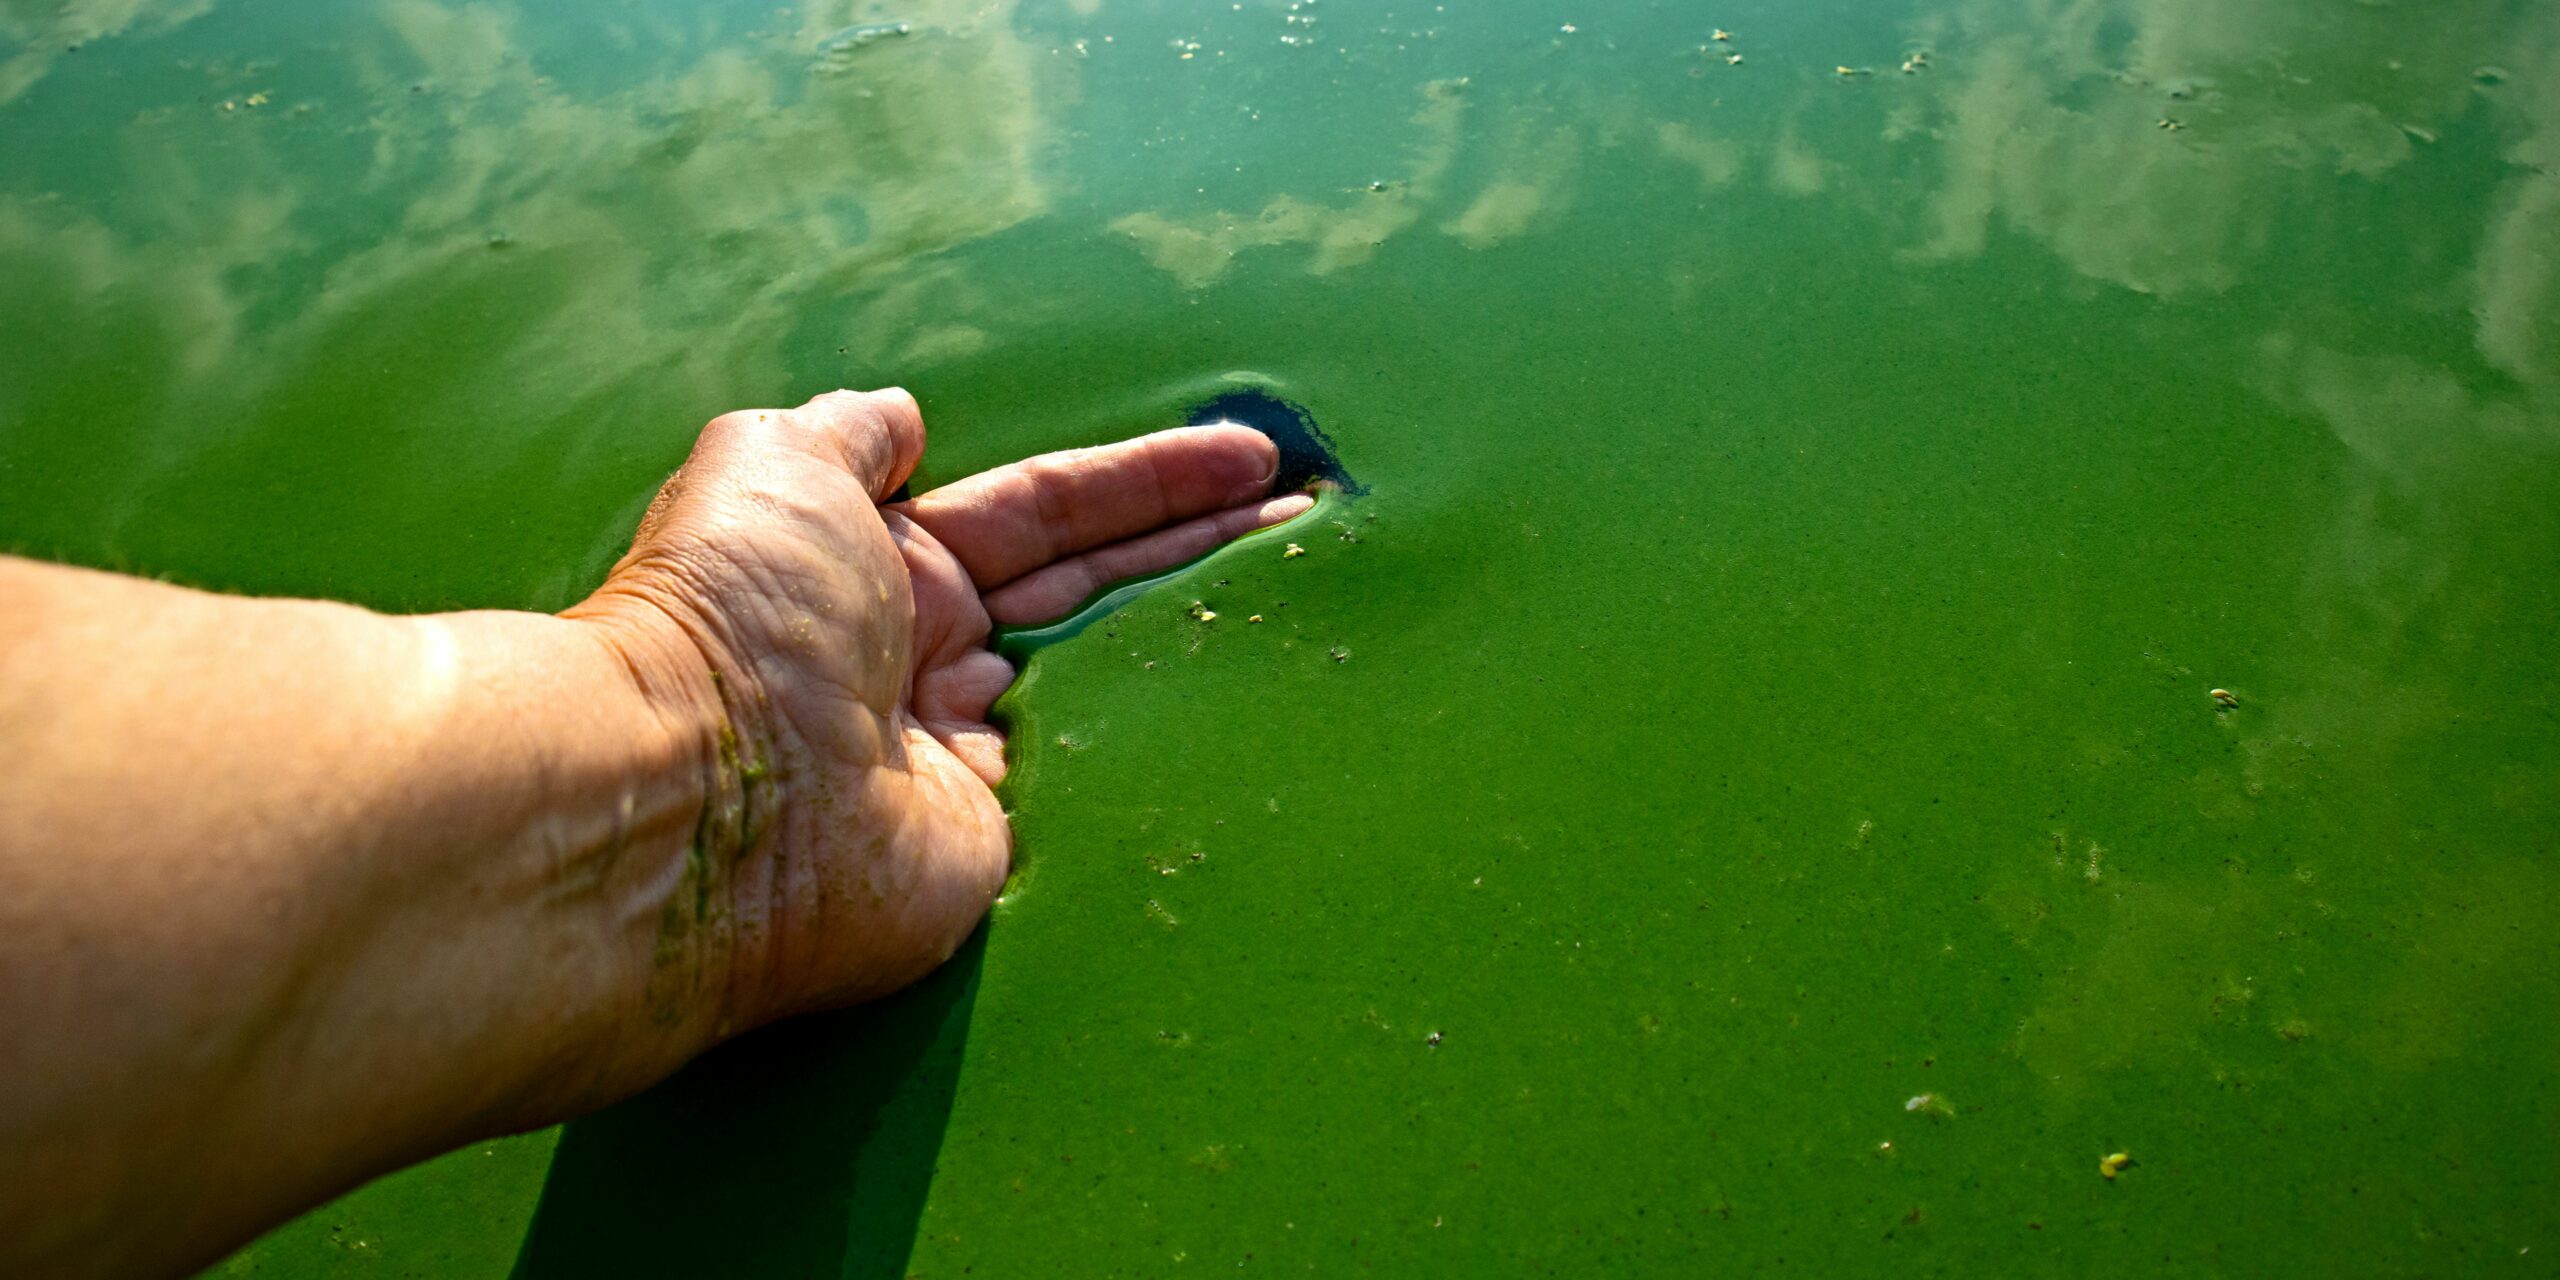 Algae as an indicator of air pollution